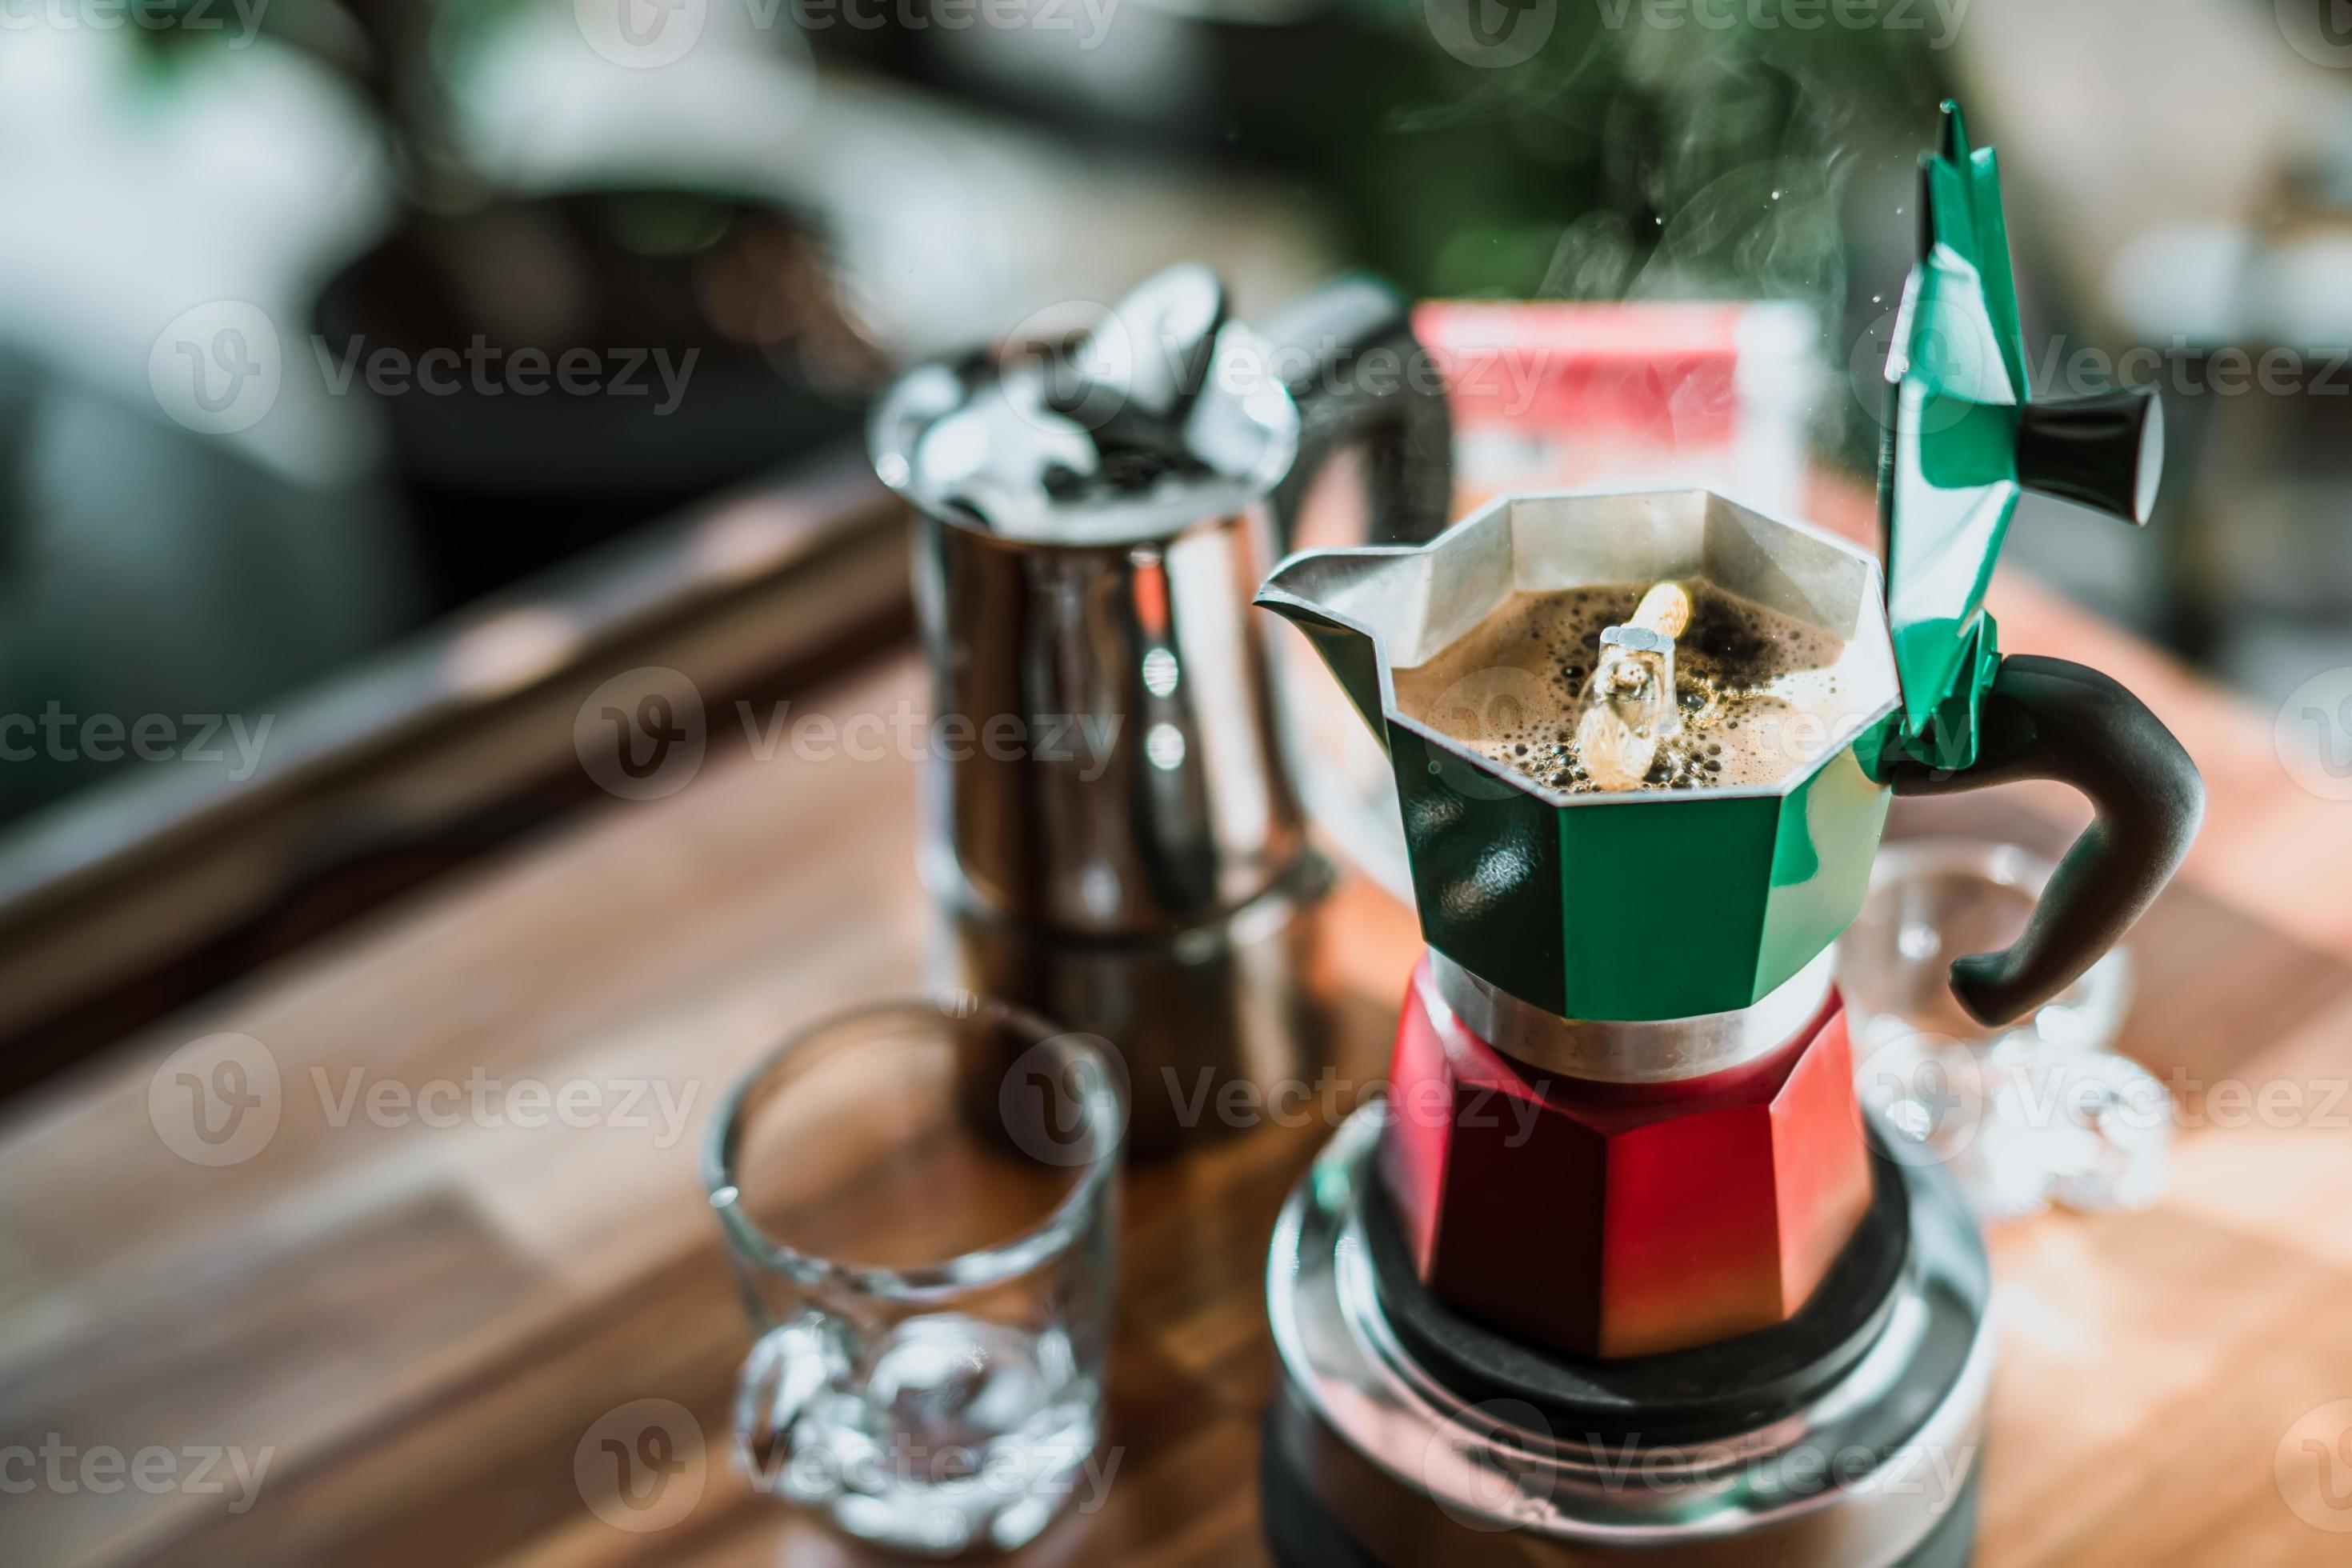 café caliente en moka pot en estufa eléctrica, cafetera vintage en mesa de  madera en casa, enfoque selectivo. 6965677 Foto de stock en Vecteezy